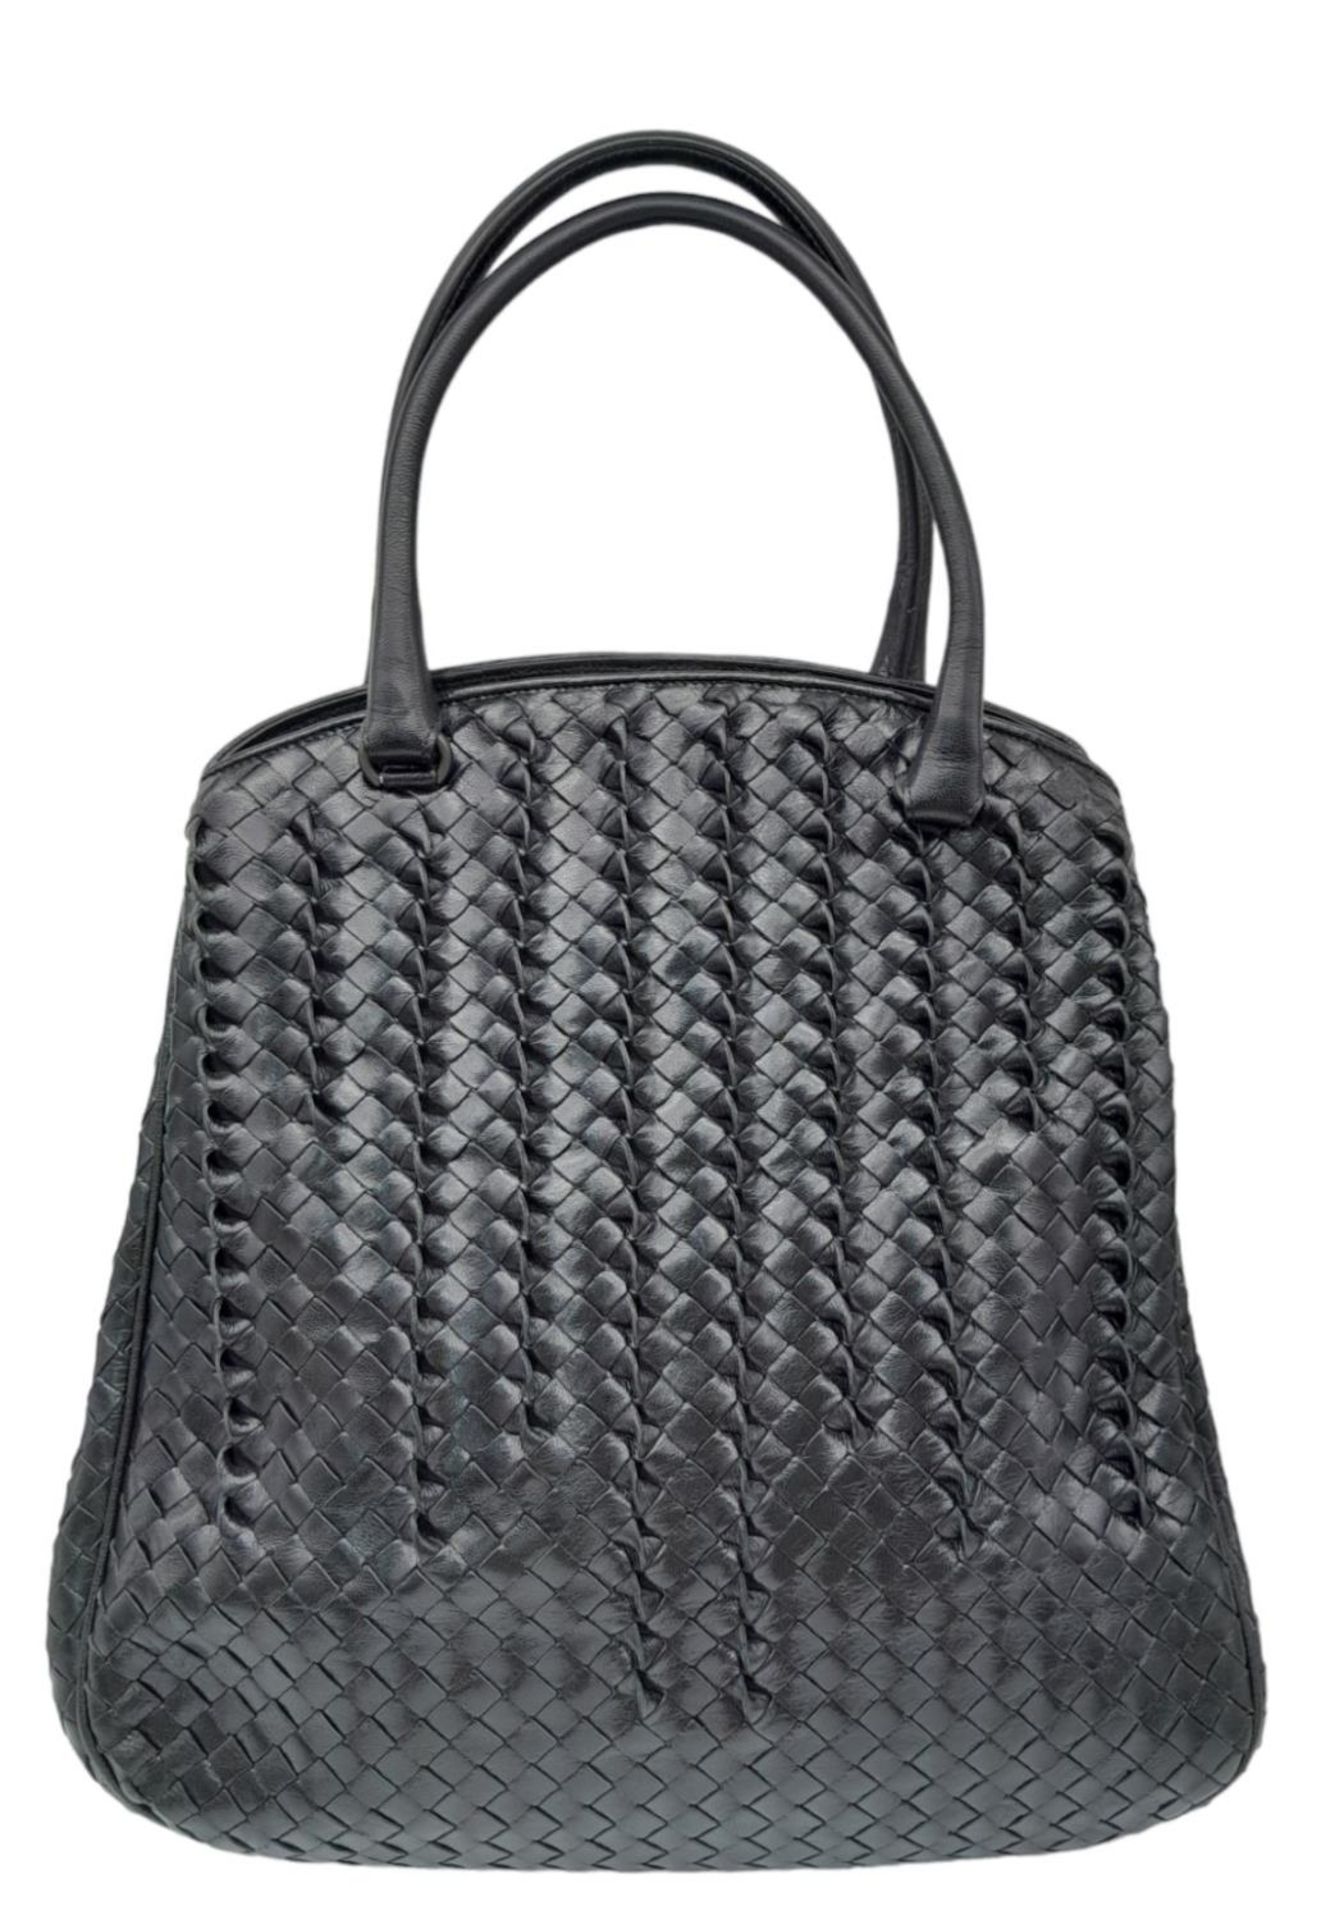 A Bottega Veneta Black Bag. Intrecciato leather exterior with two rolled leather handles. Beige